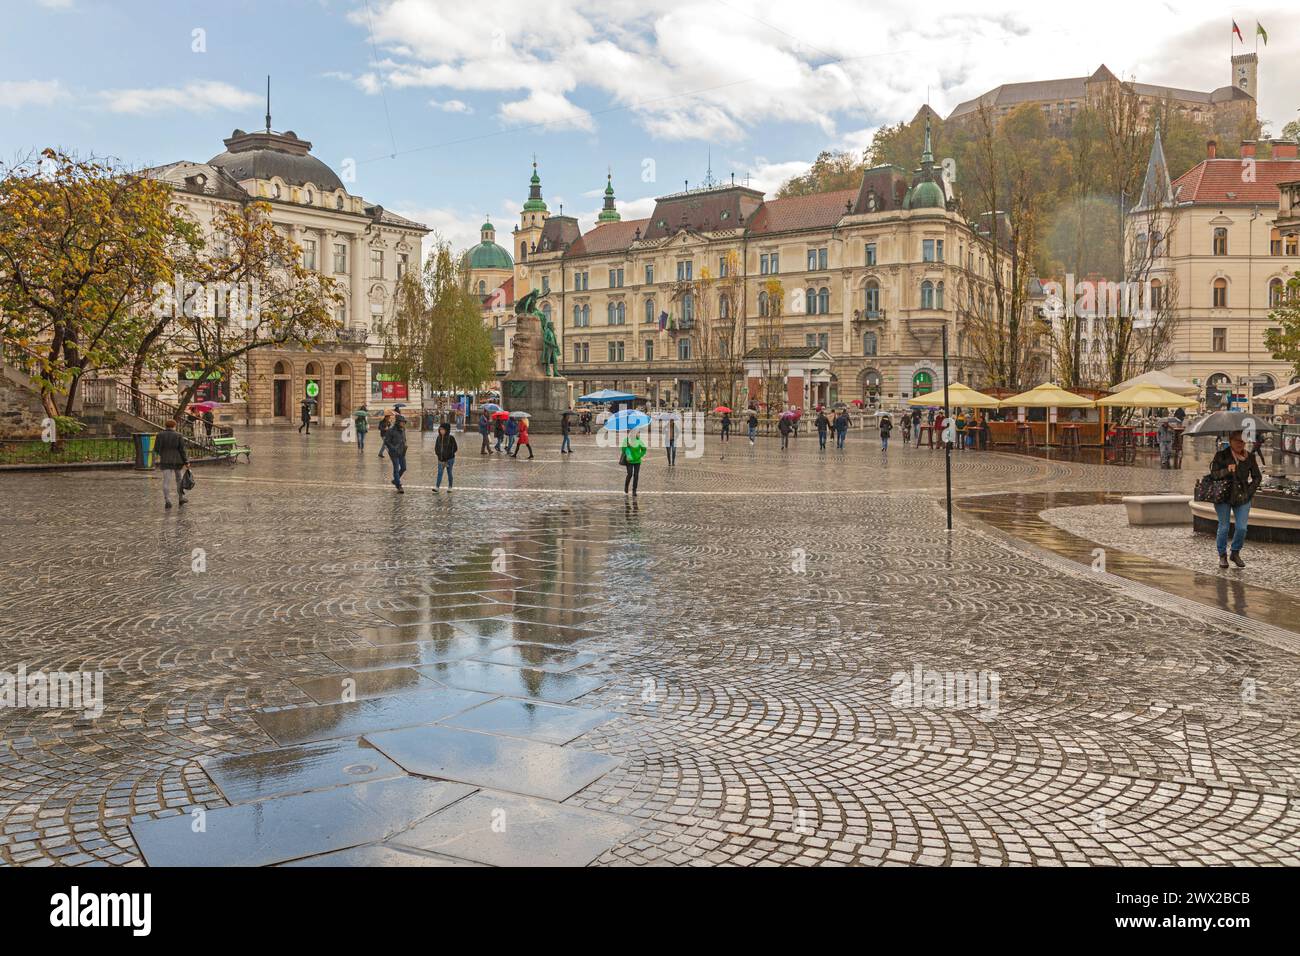 Ljubljana, Slovenia - November 4, 2019: People Walking at Wet Cobblestones Square Rainin Capital City Centre. Stock Photo